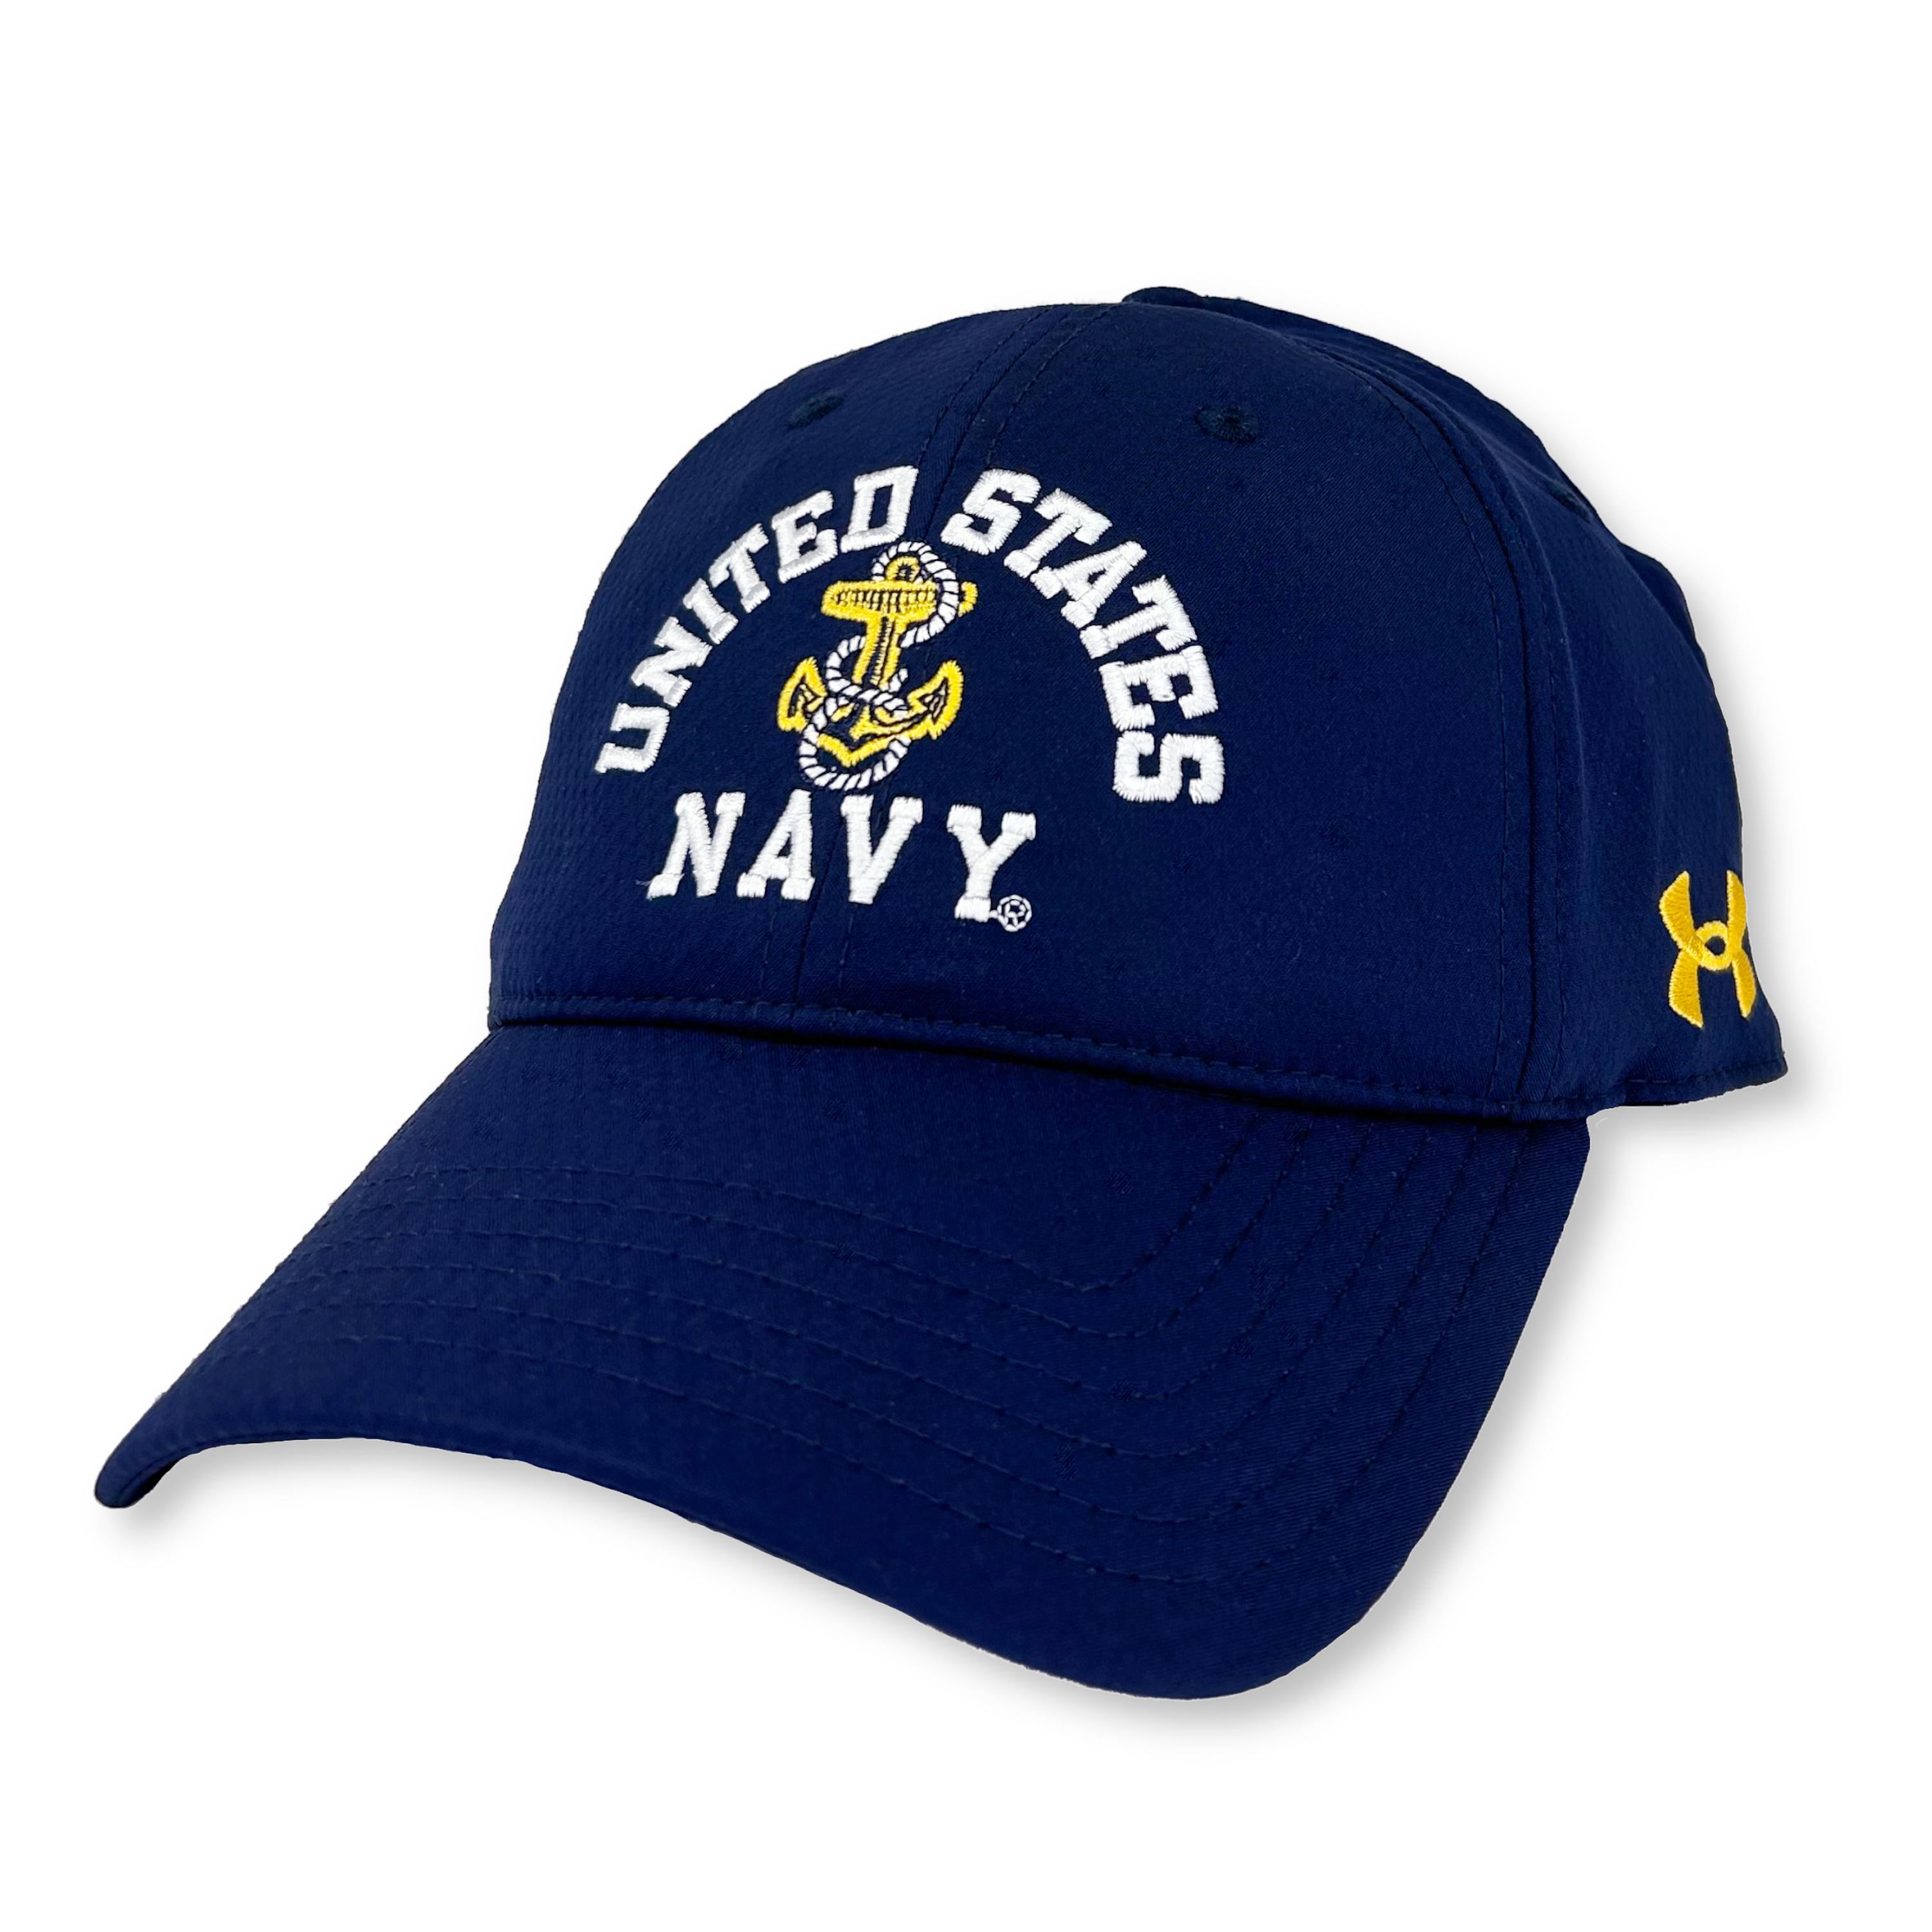 Navy States Armour Hat Under (Navy) Adjustable United Zone